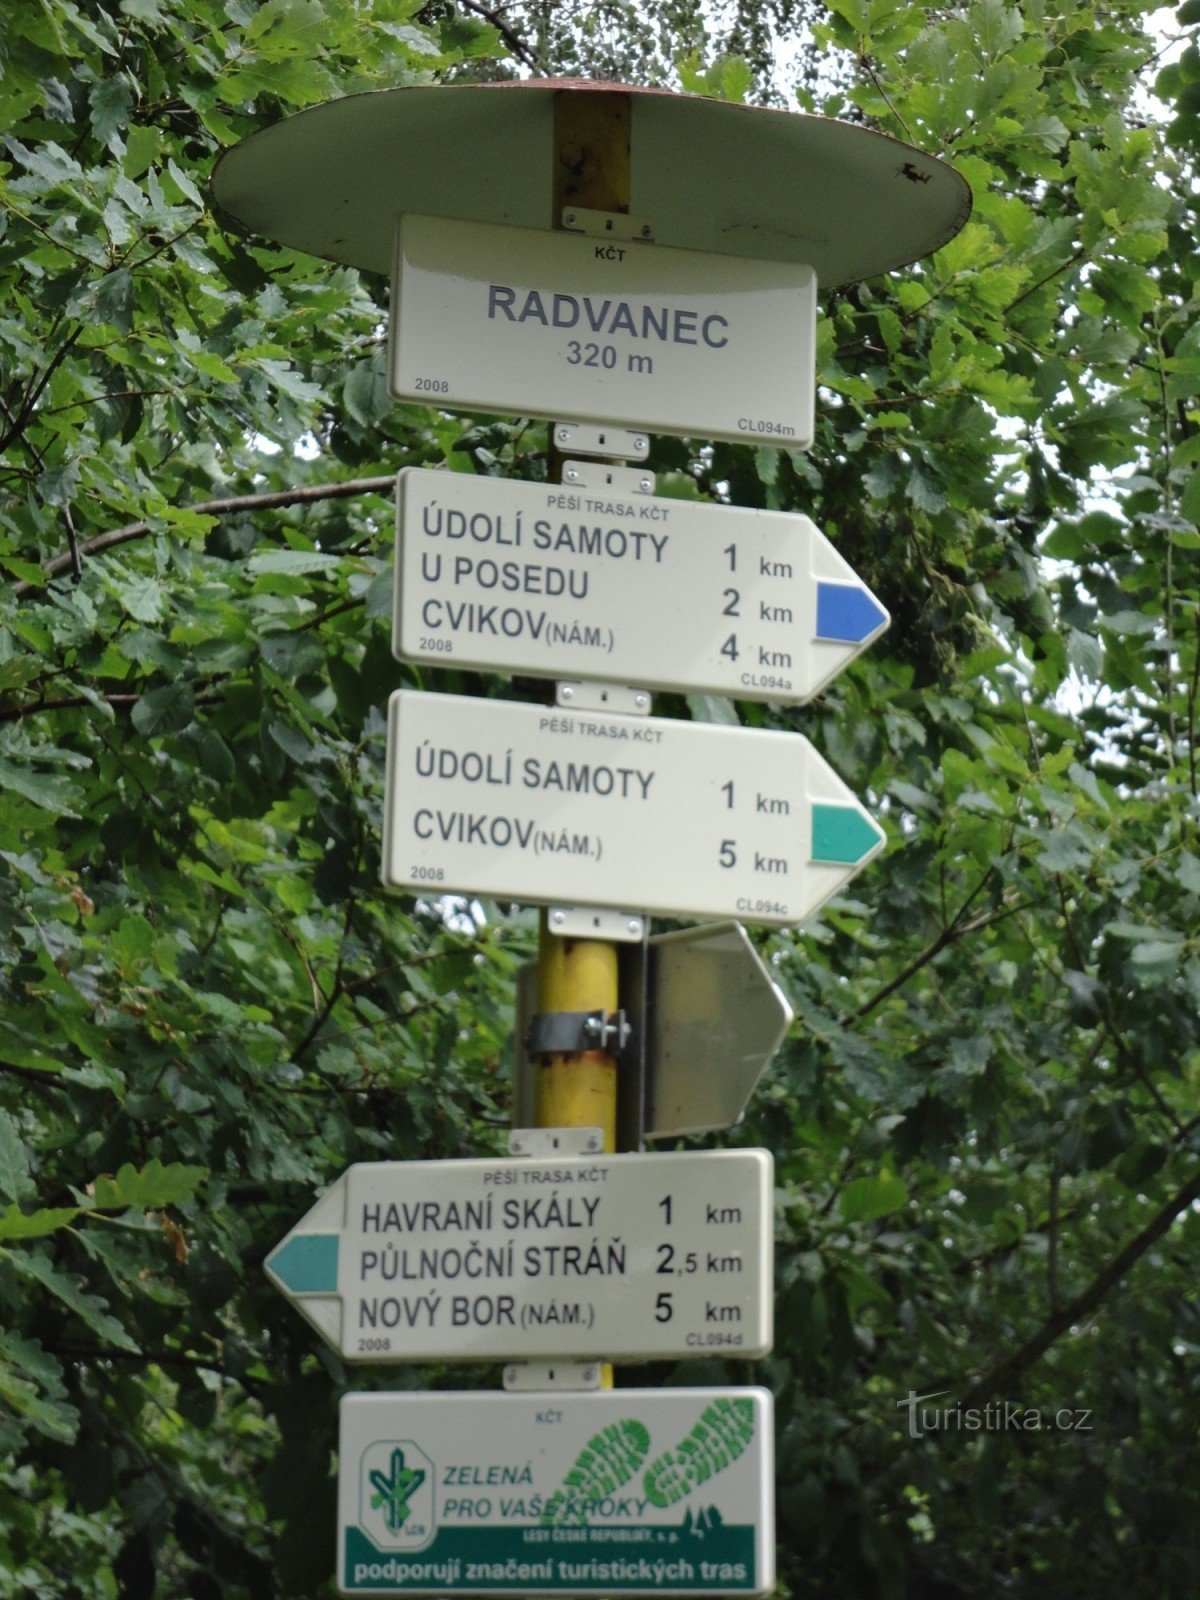 carrefour touristique Radvanec